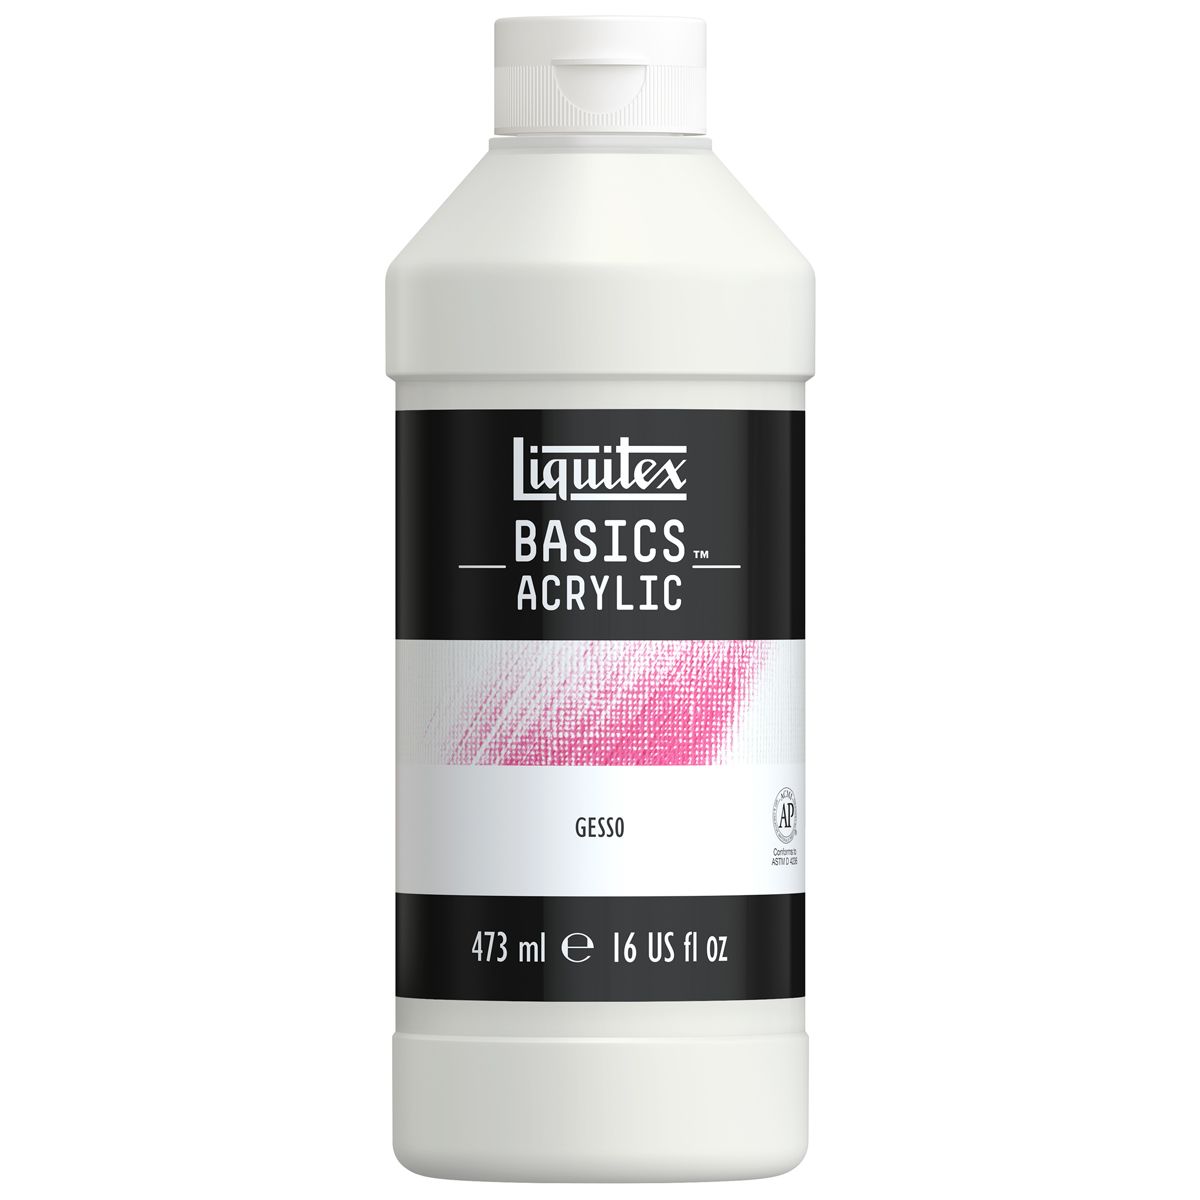 Liquitex Basics Acrylic Gesso - 473ml (16oz)